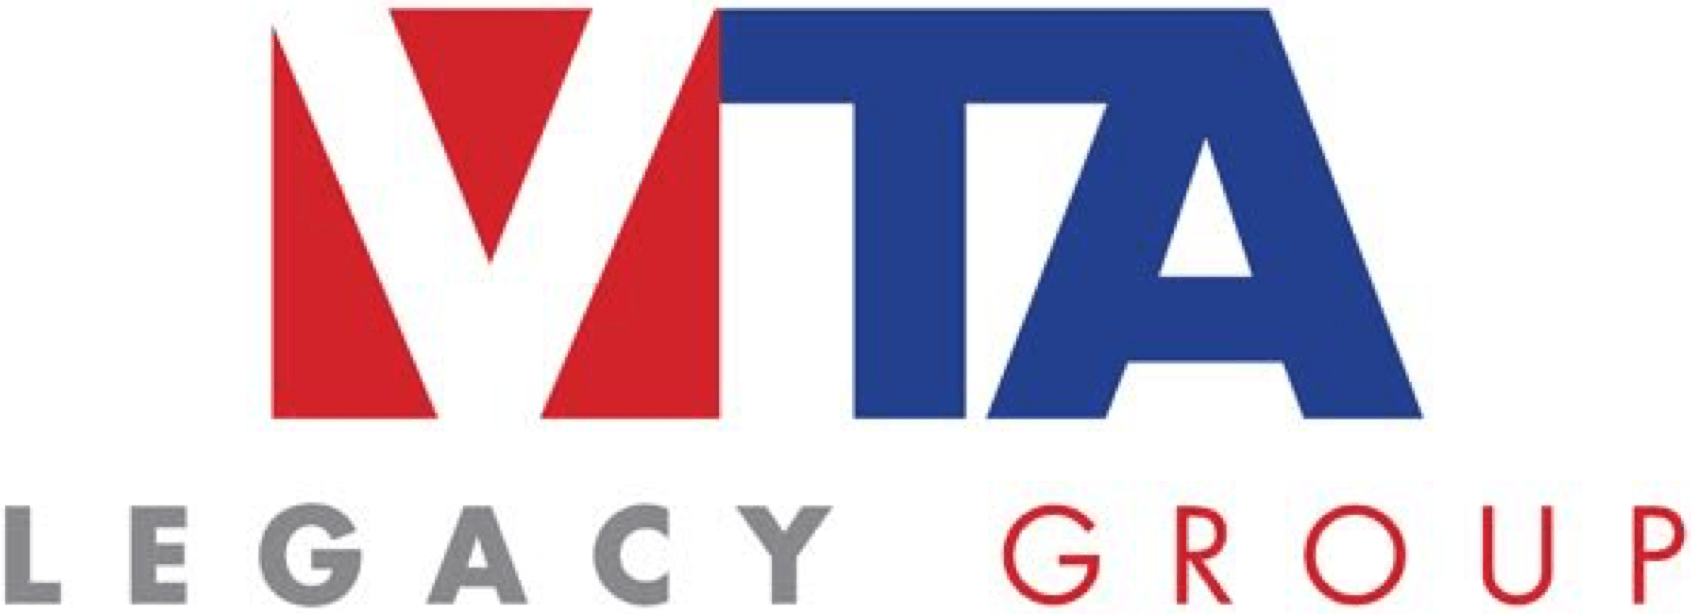 VTA Legacy Group logo color